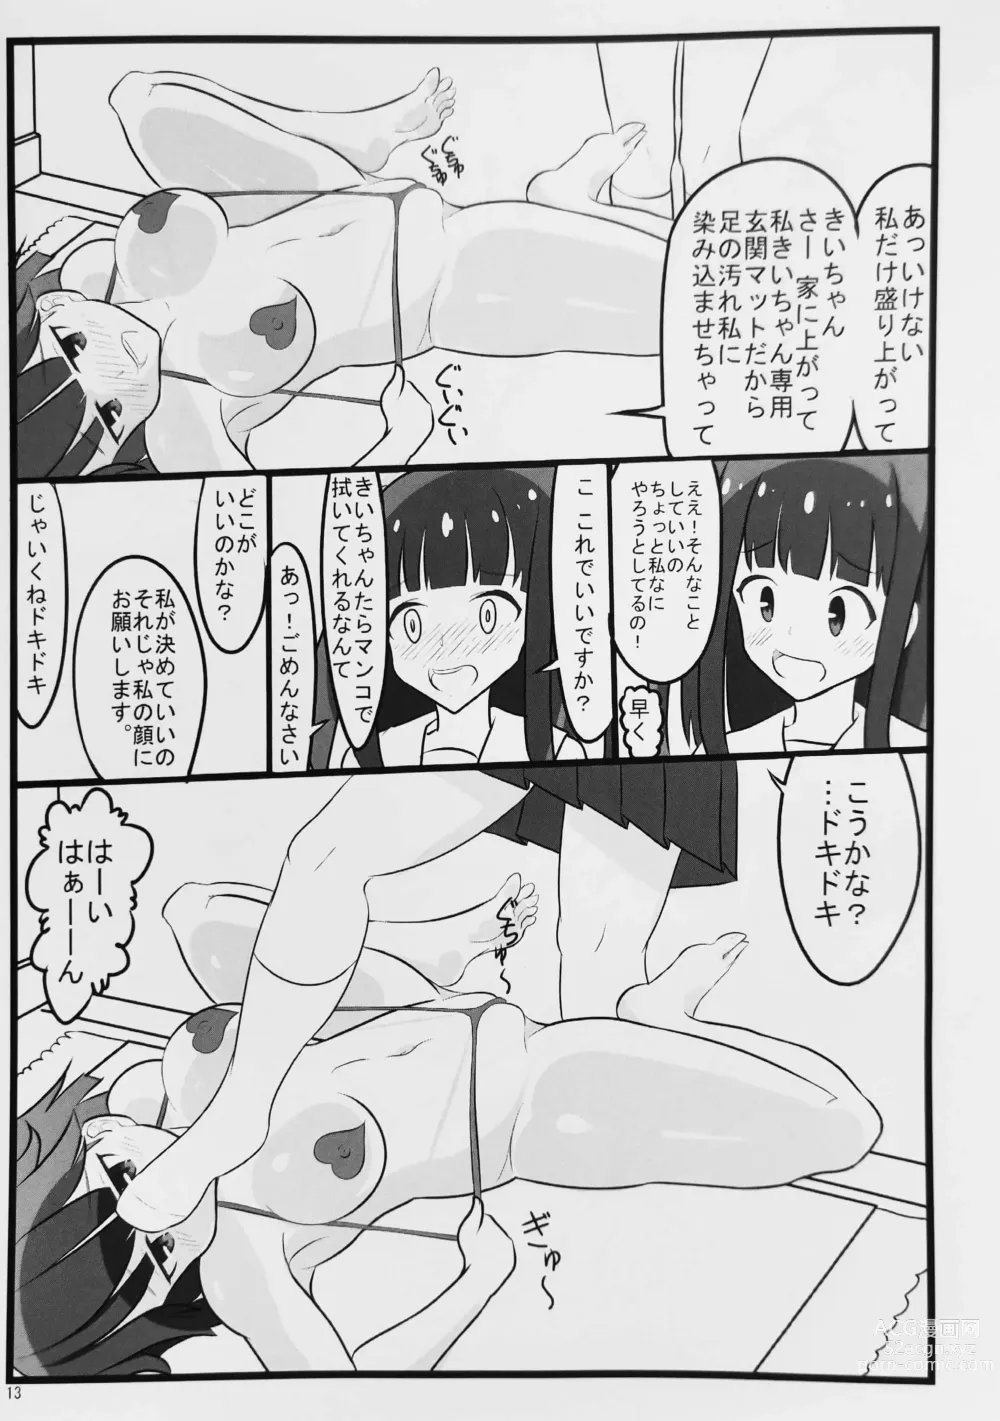 Page 12 of doujinshi Muremure Kunkun